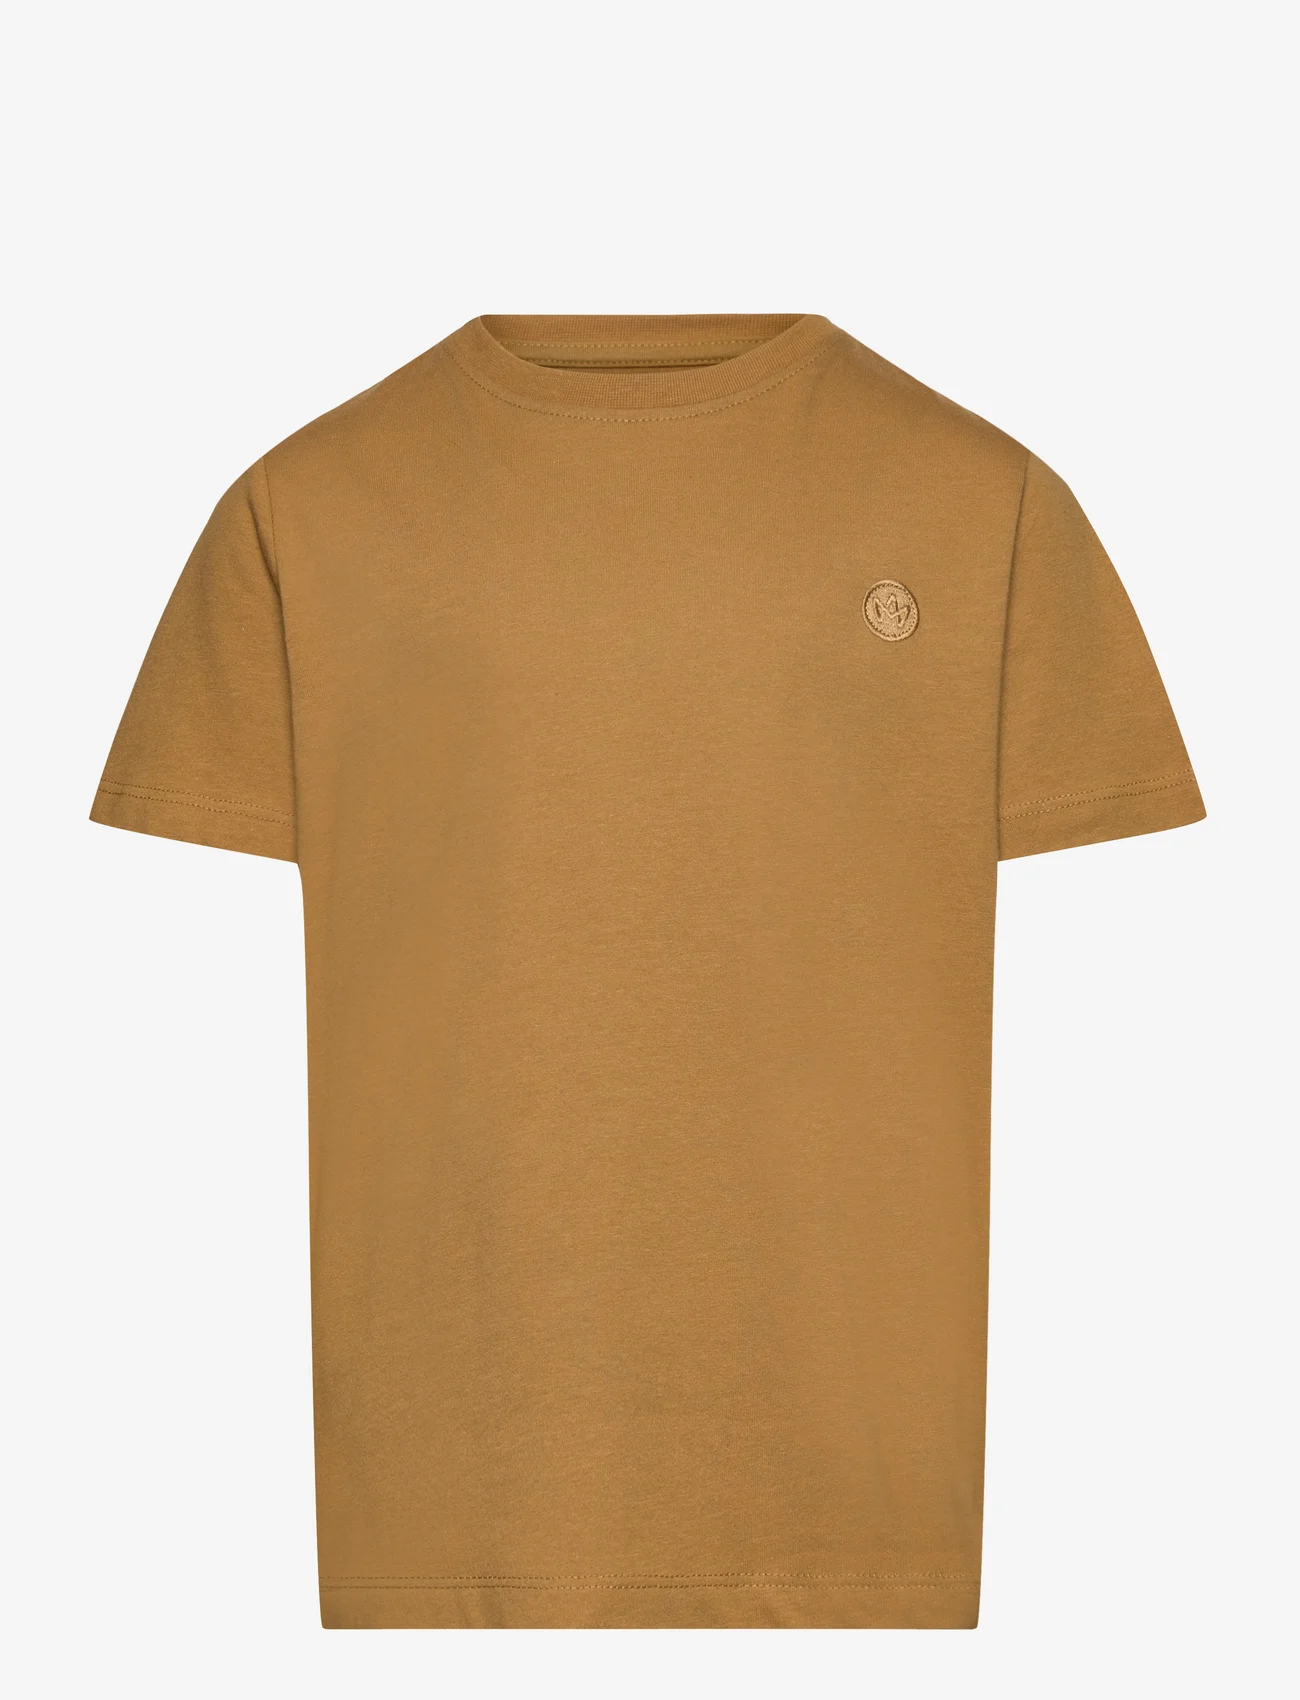 Kronstadt - Timmi Kids Organic/Recycled t-shirt - korte mouwen - olive gold - 0